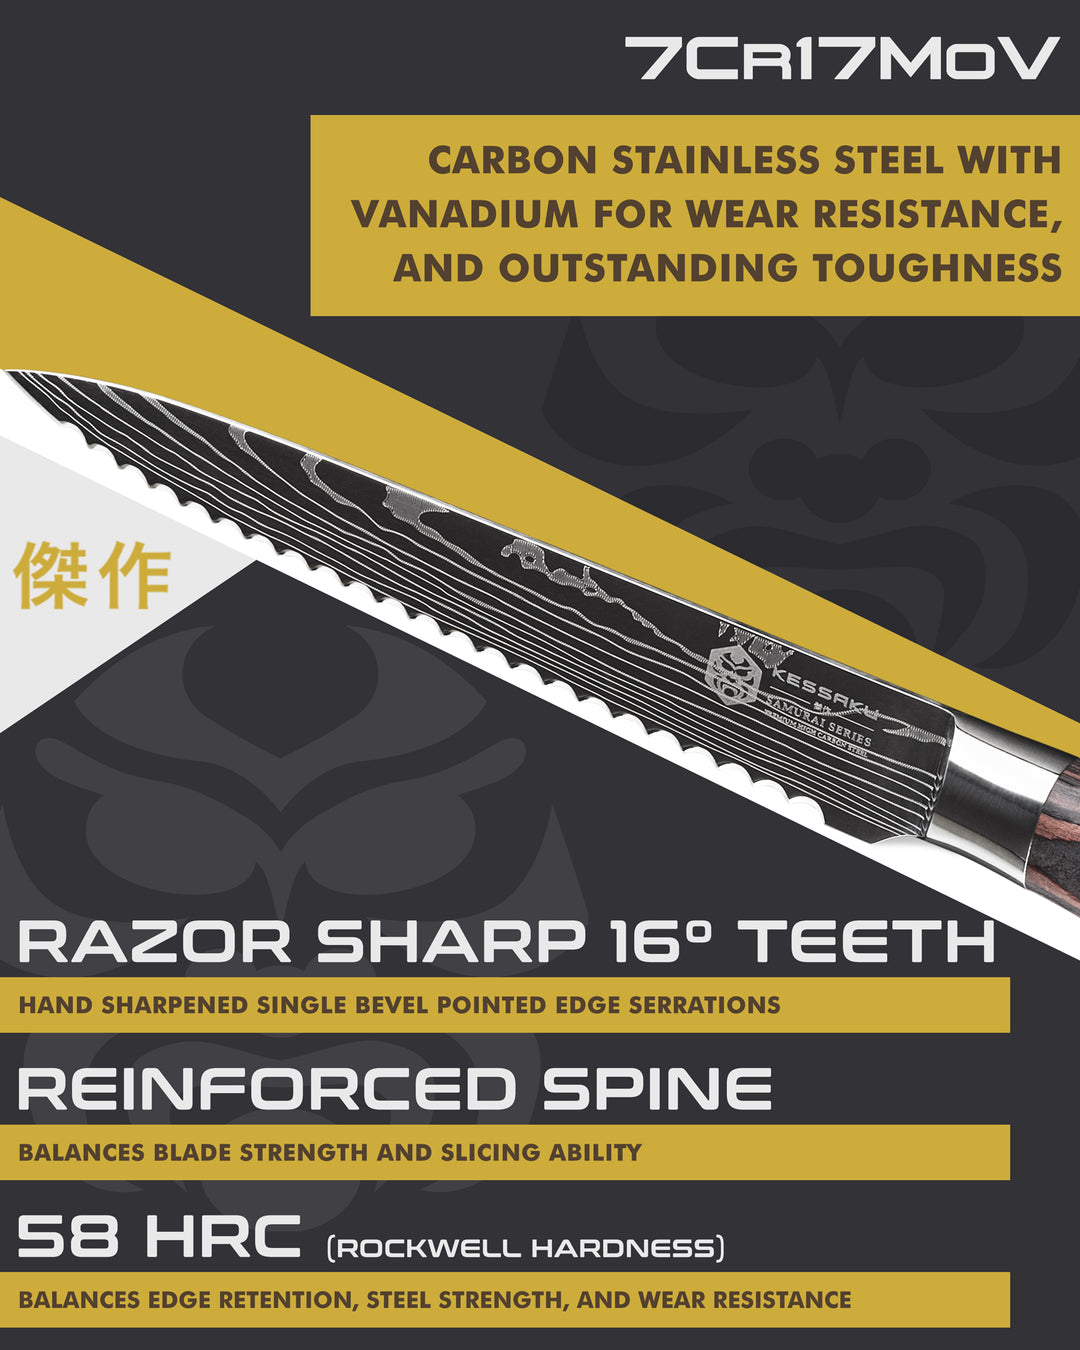 Kessaku Samurai Serrated Utility Knife blade features: 7Cr17MoV steel, 58 HRC, 16 degree edge, reinforced spine